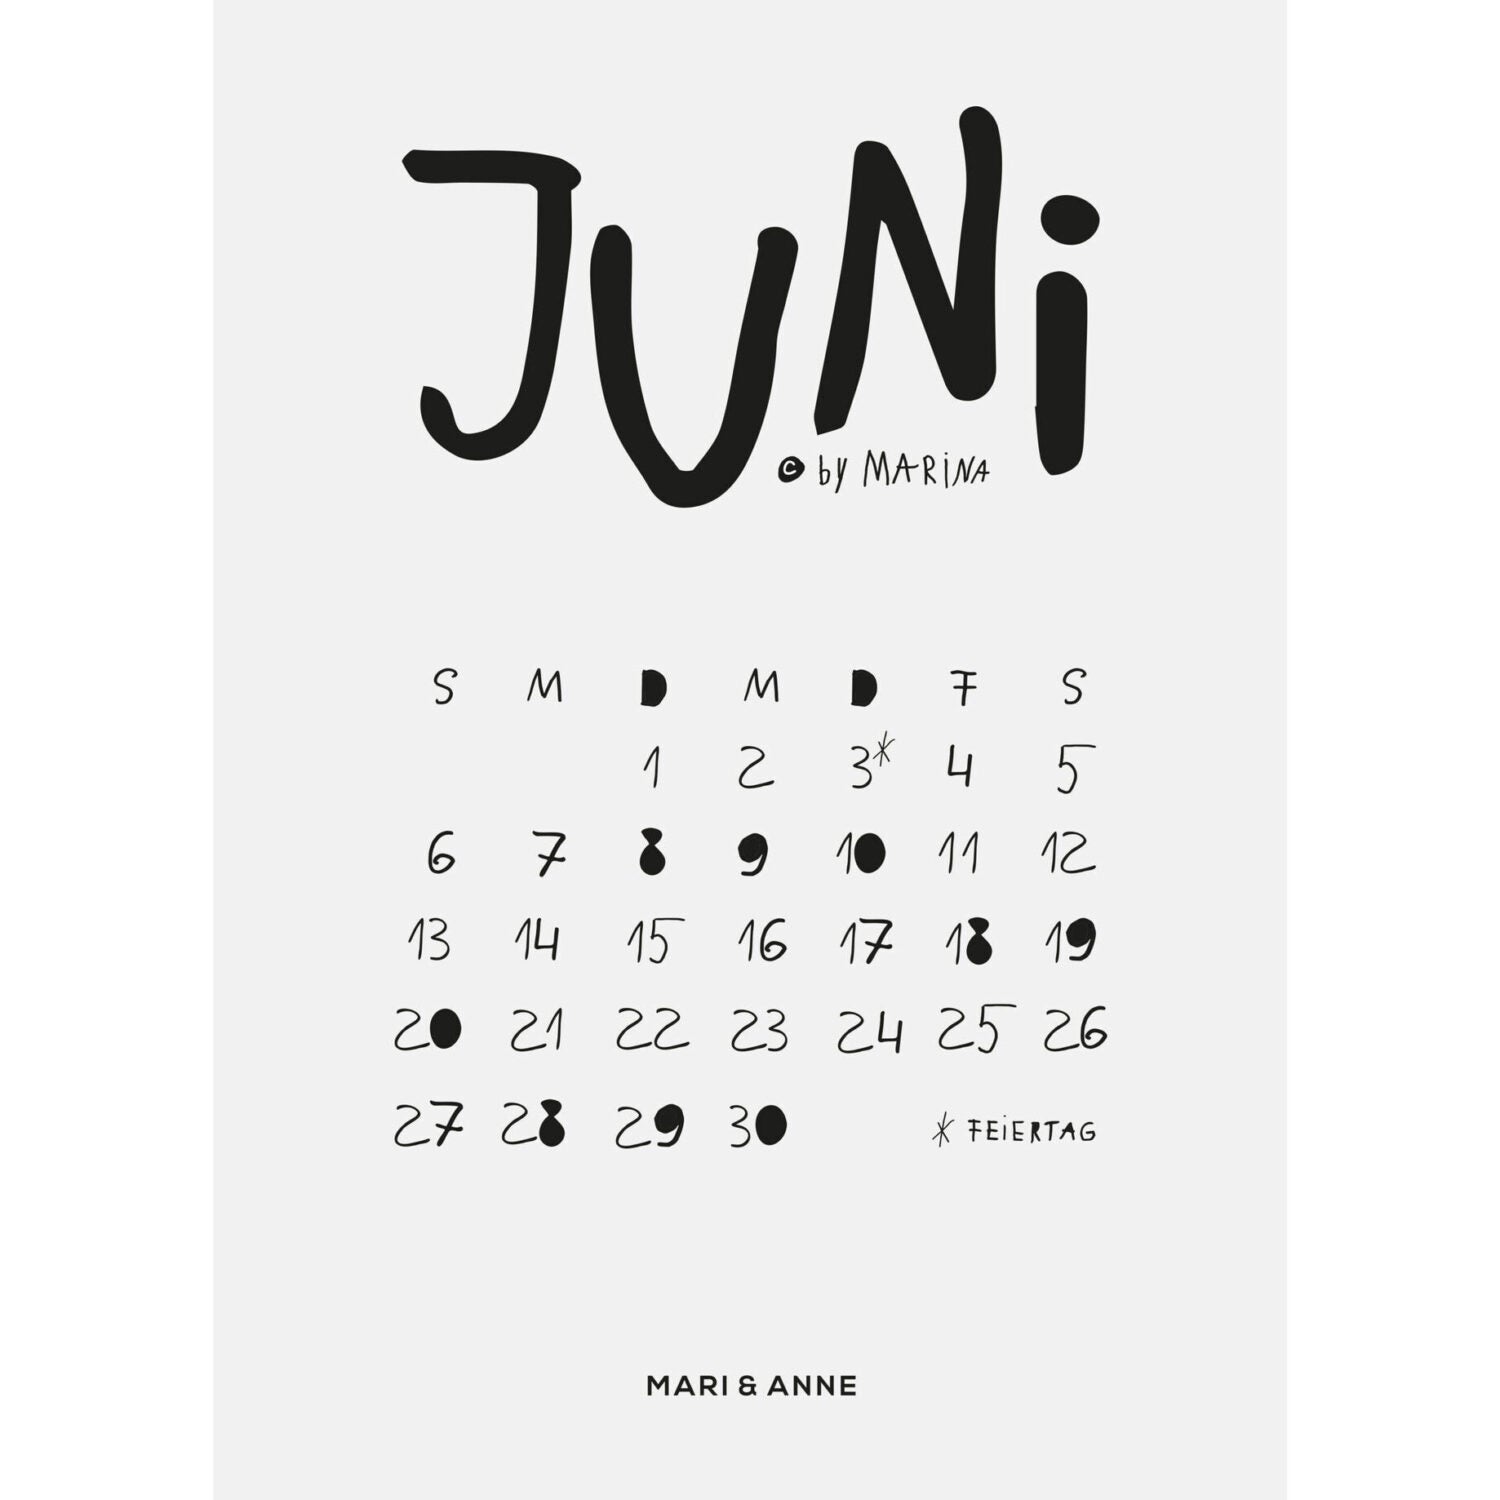 MARI&ANNE Kalender 2021 by Marina&Friends (9)